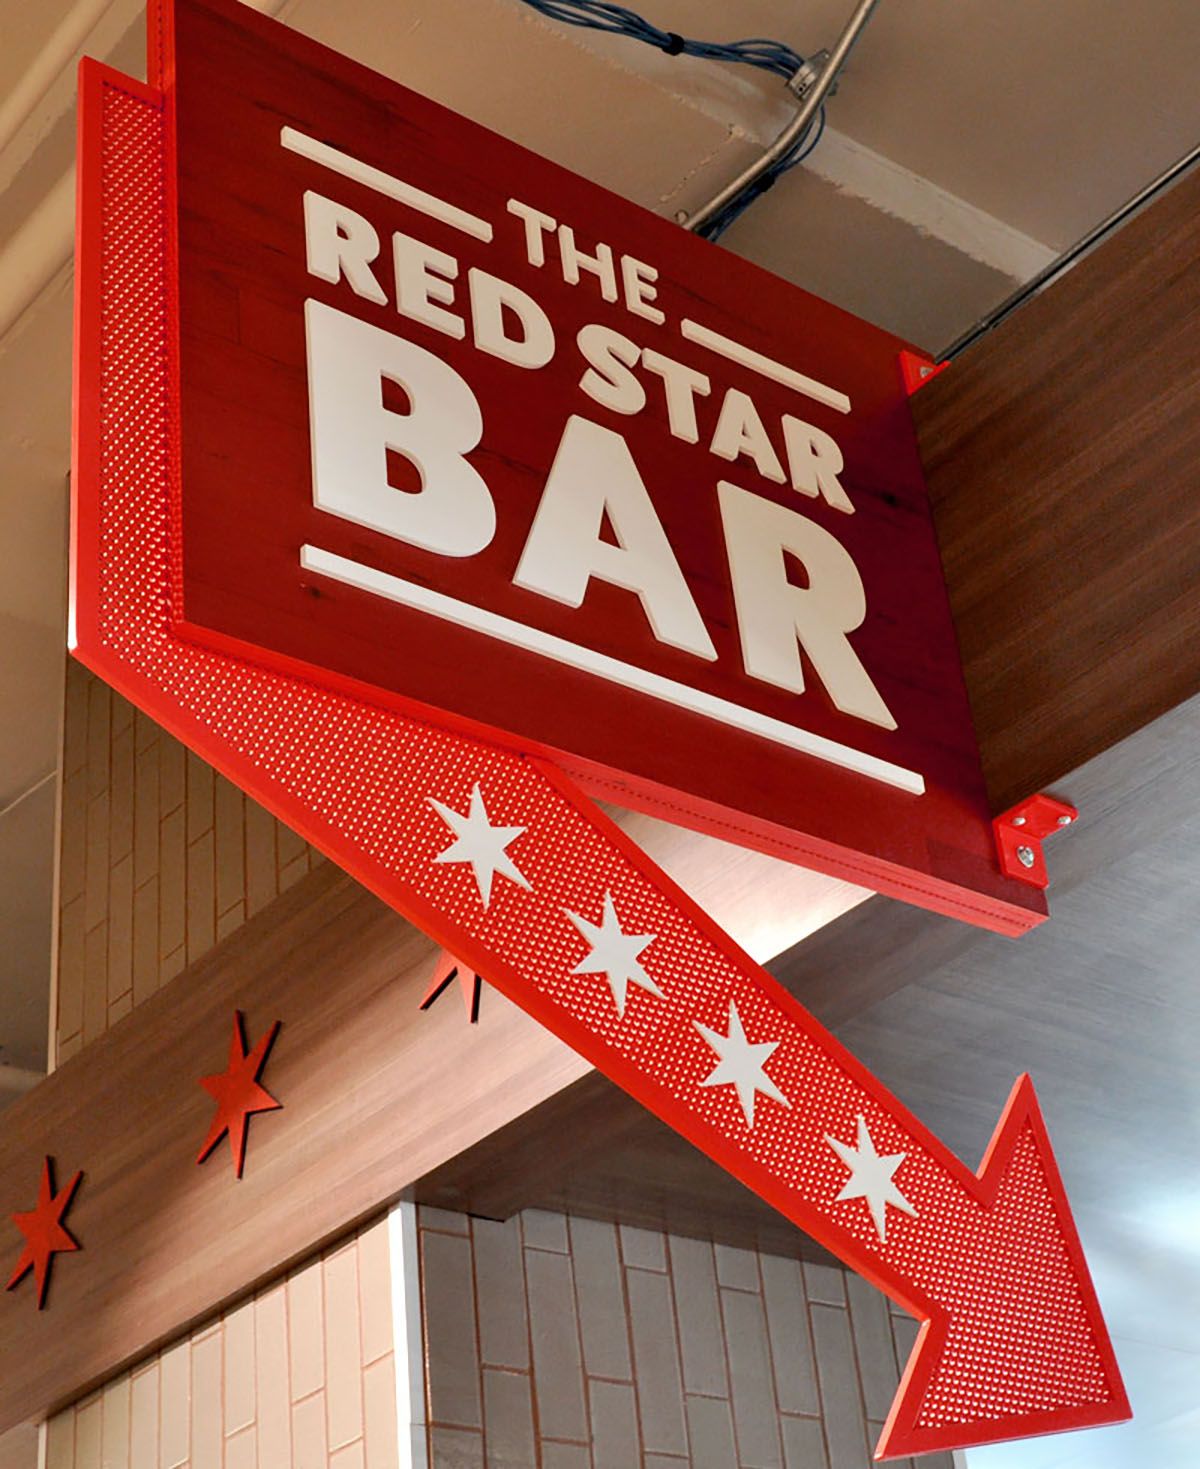 Red Star Bar